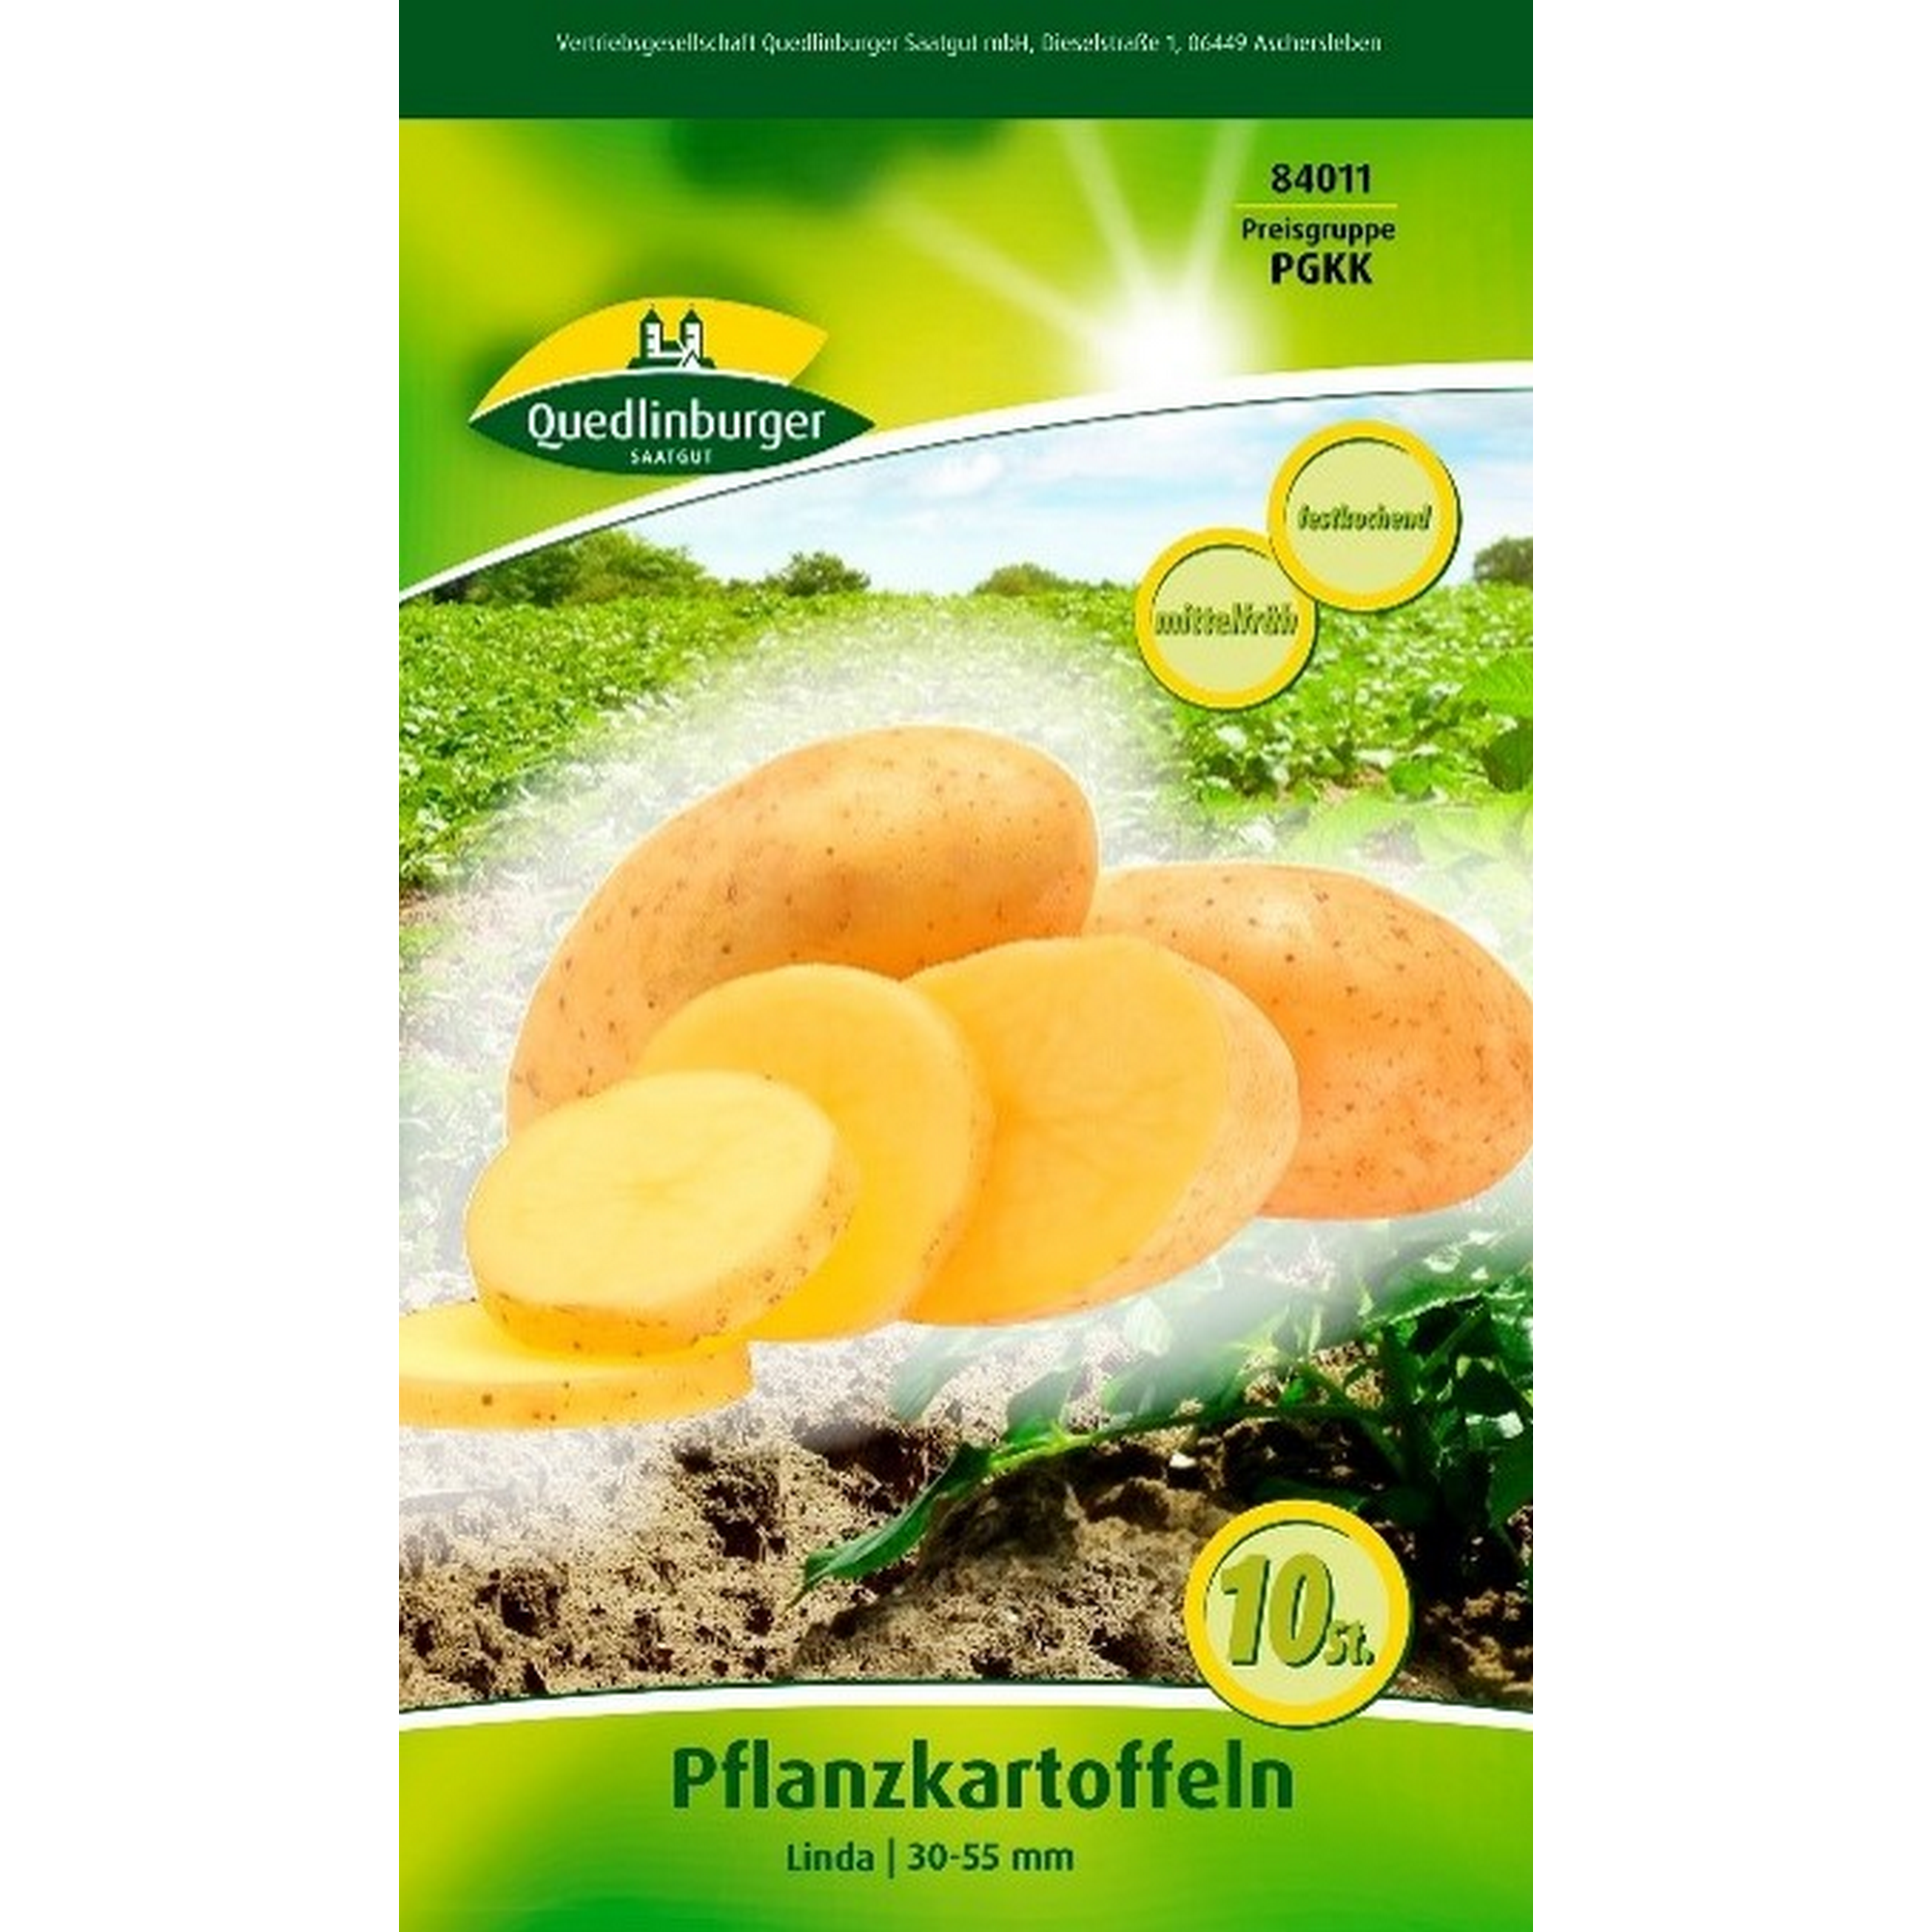 Pflanzkartoffel 'Linda' gelb 10 Stück + product picture